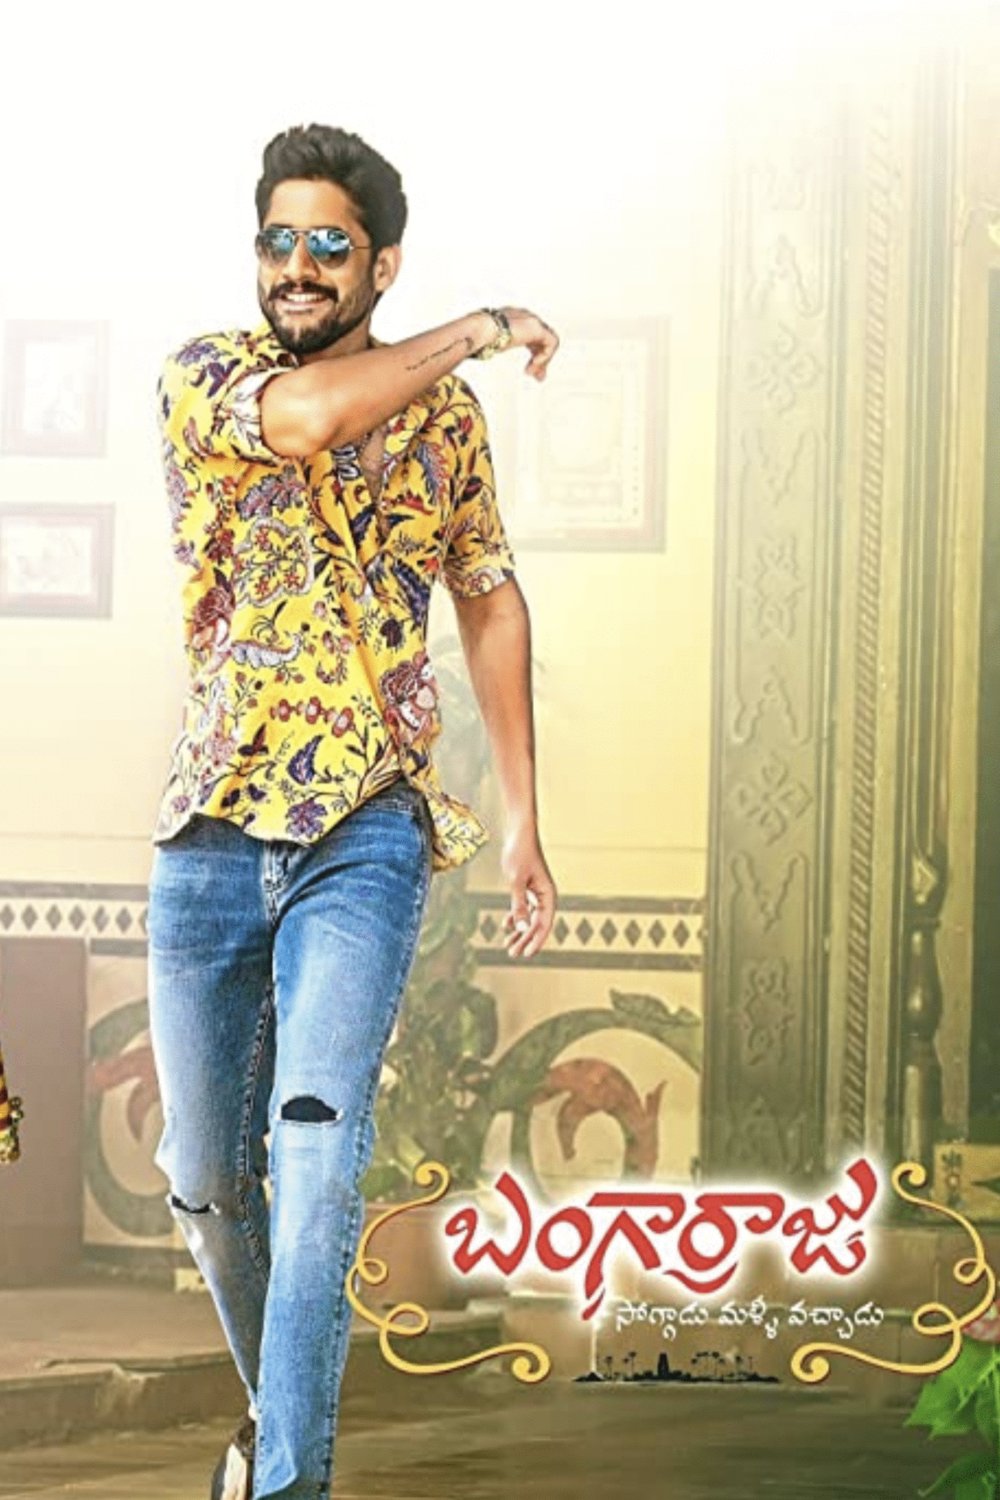 Telugu poster of the movie Bangarraju